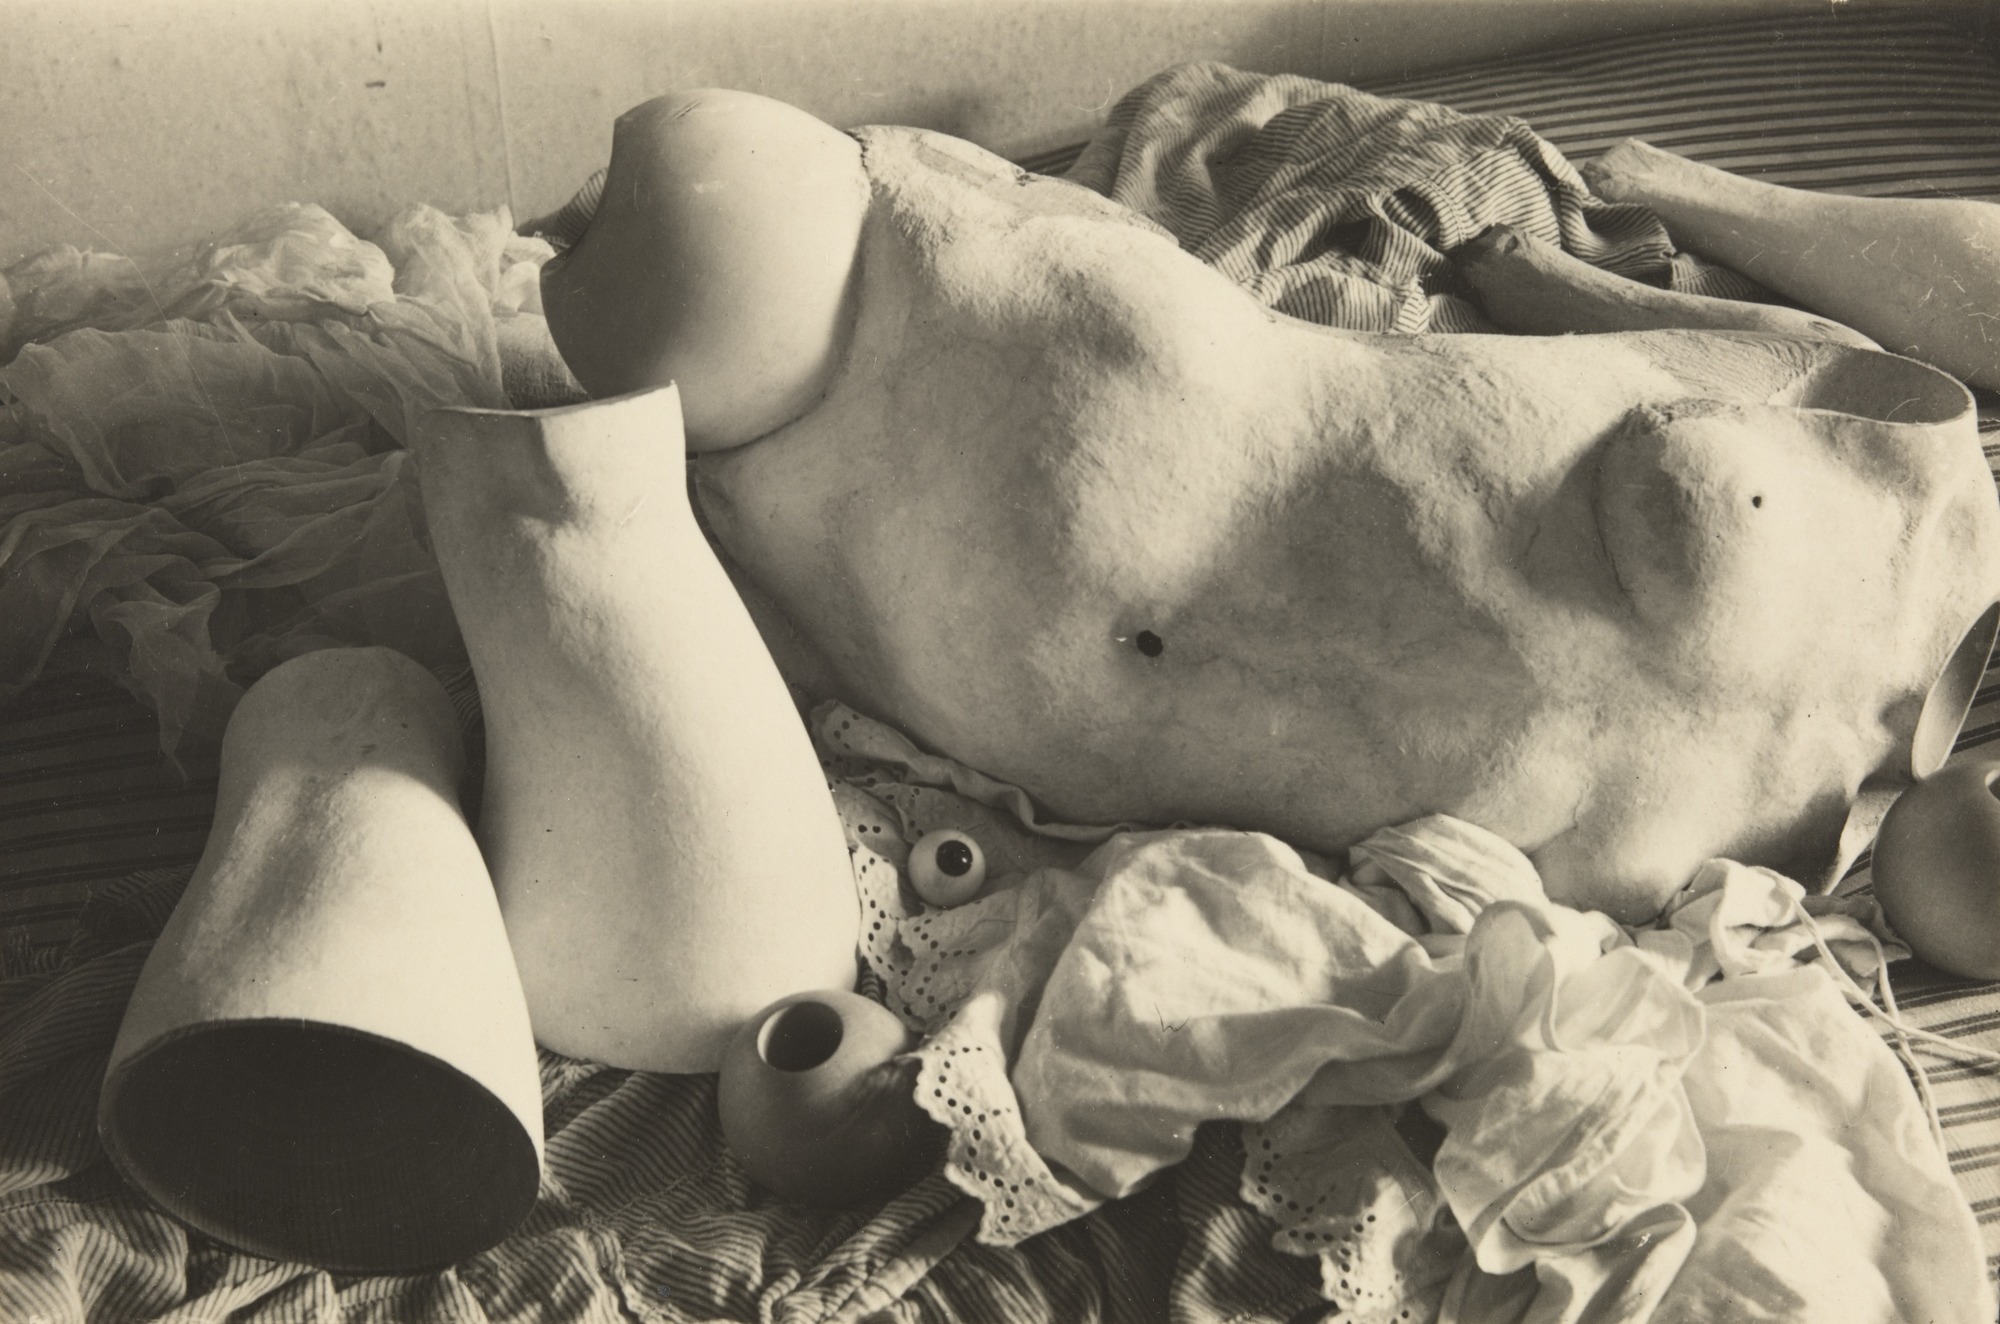 Hans Bellmer, The Doll, 1936, gelatin silver print (MoMA)